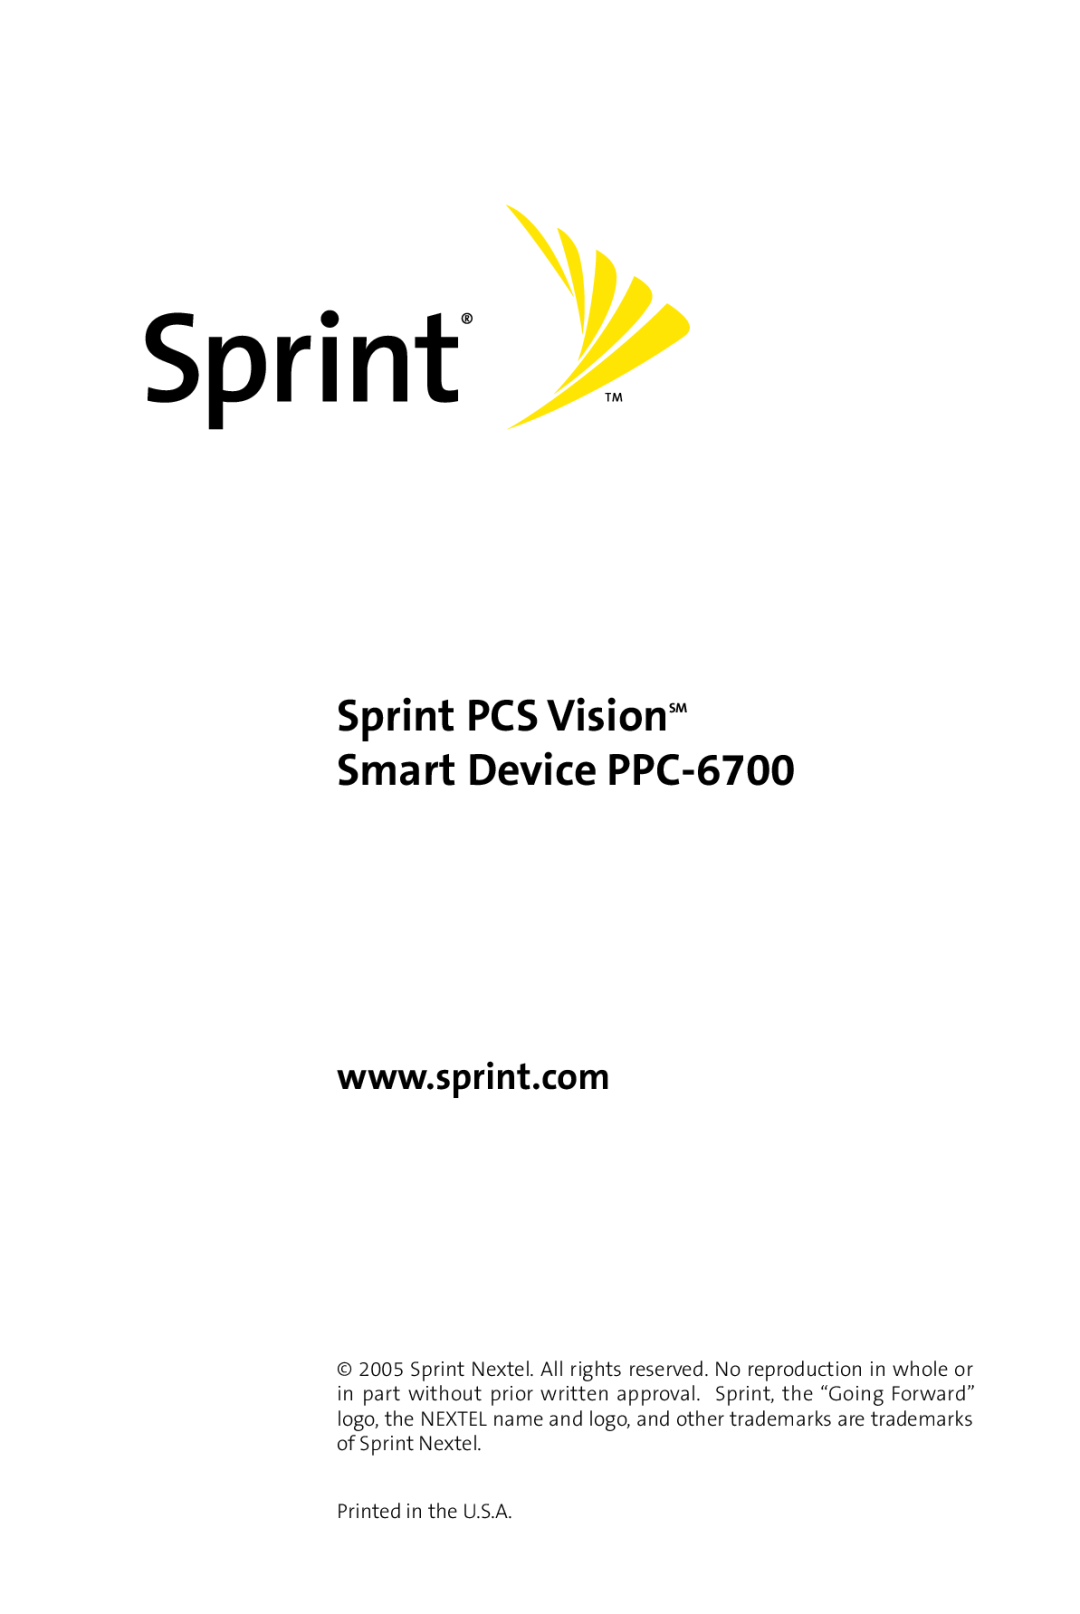 Sprint Nextel manual Sprint PCS VisionSM Smart Device PPC-6700, Printed in the U.S.A 